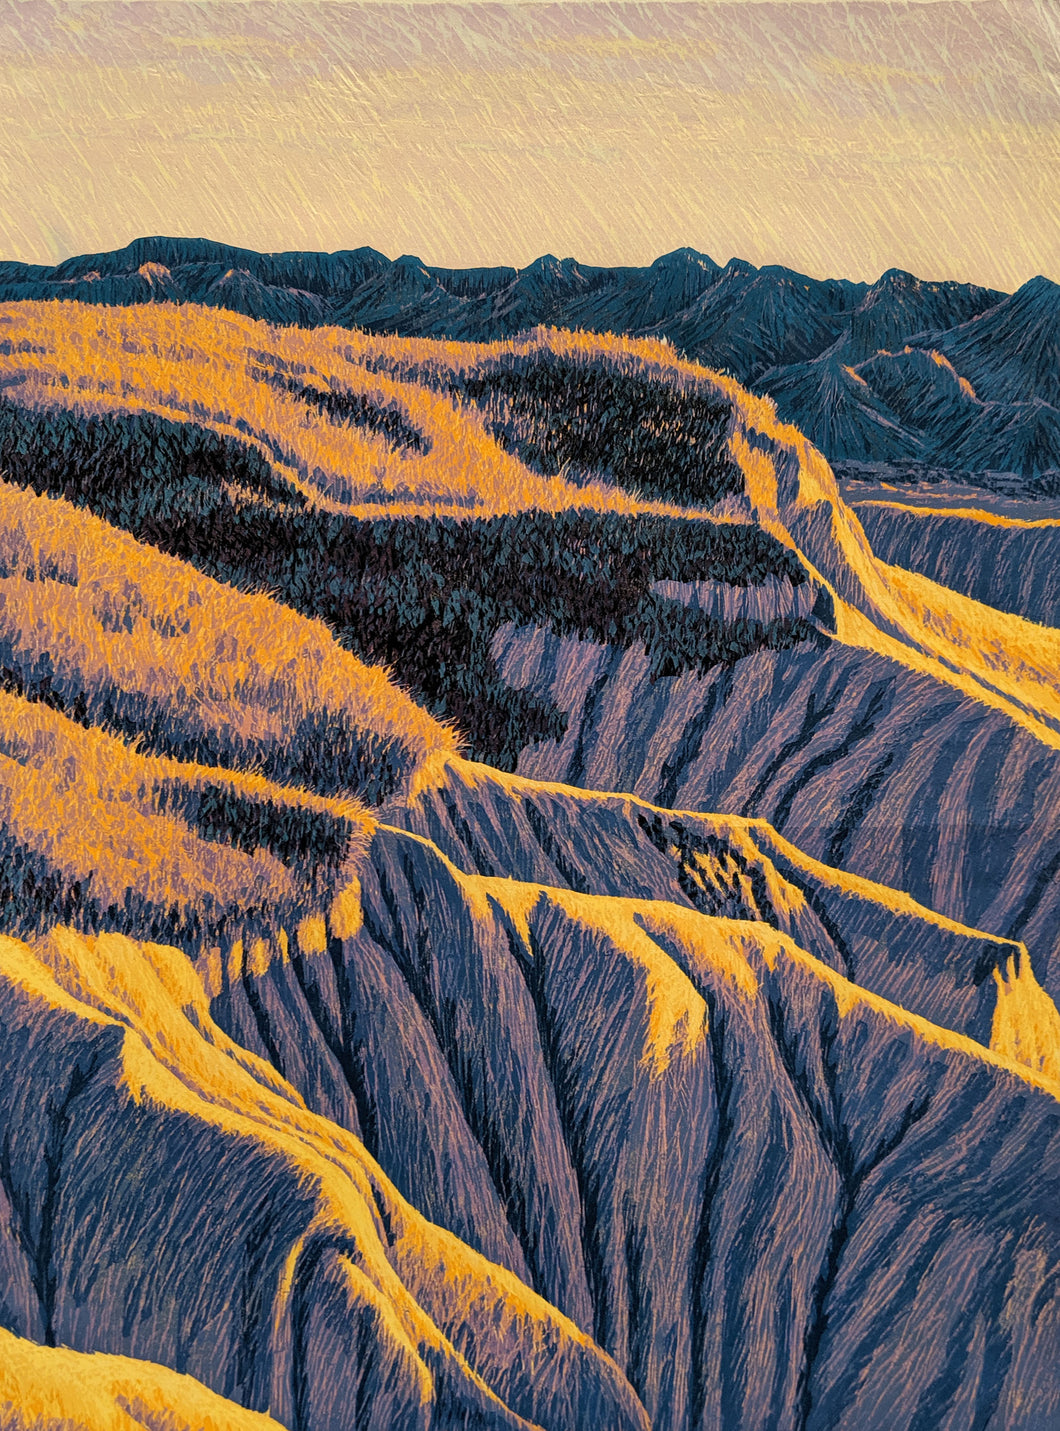 S. Dakota Hills - Limited Reduction Woodcut Print by Gordon Mortensen